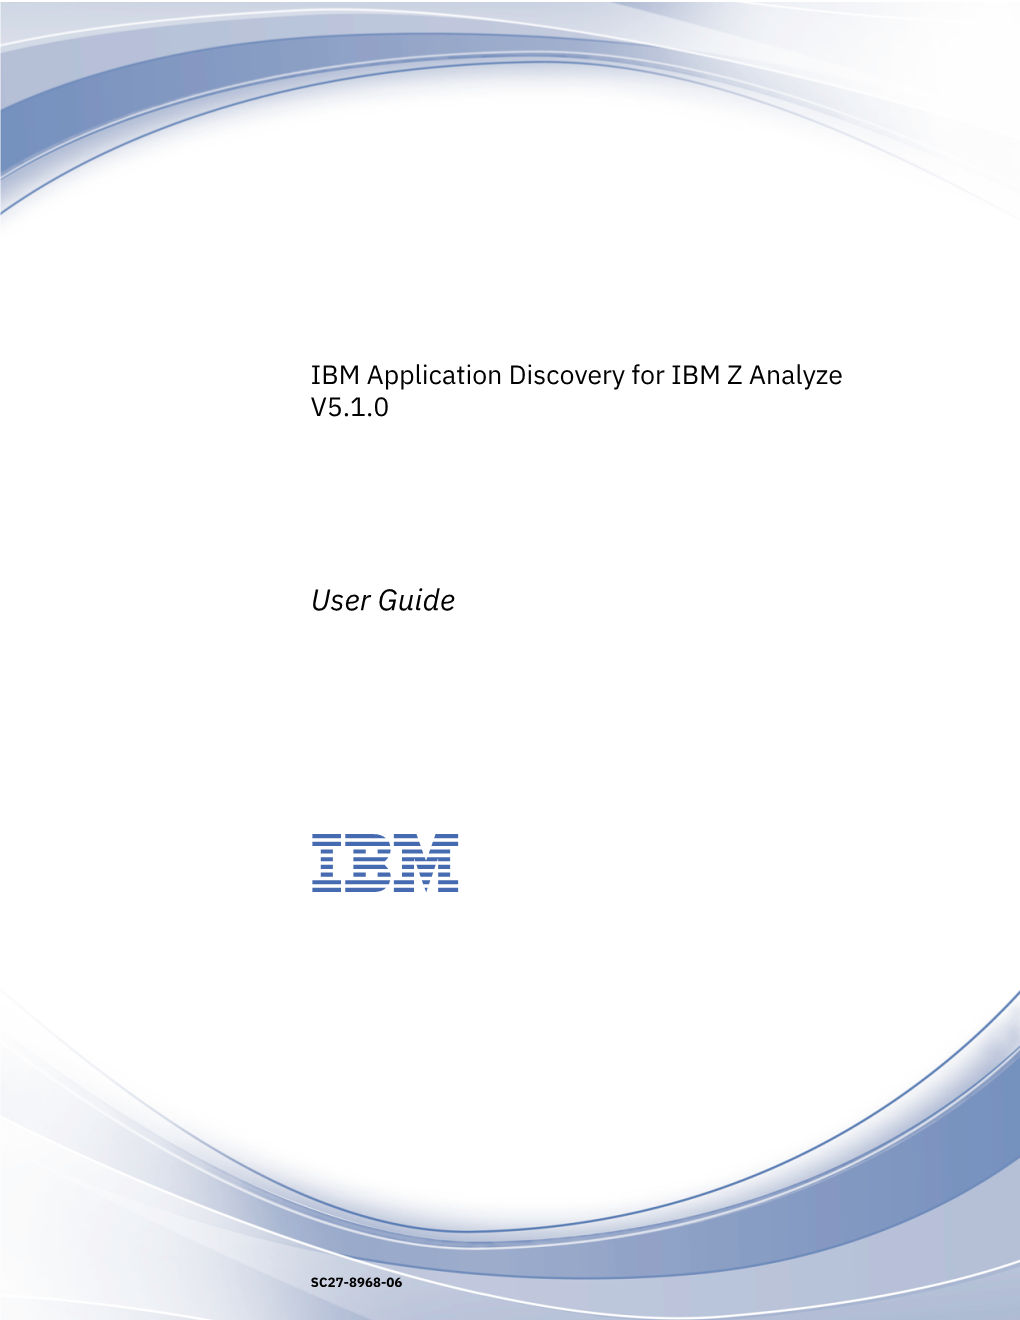 IBM Application Discovery for IBM Z Analyze V5.1.0: User Guide Chapter 2